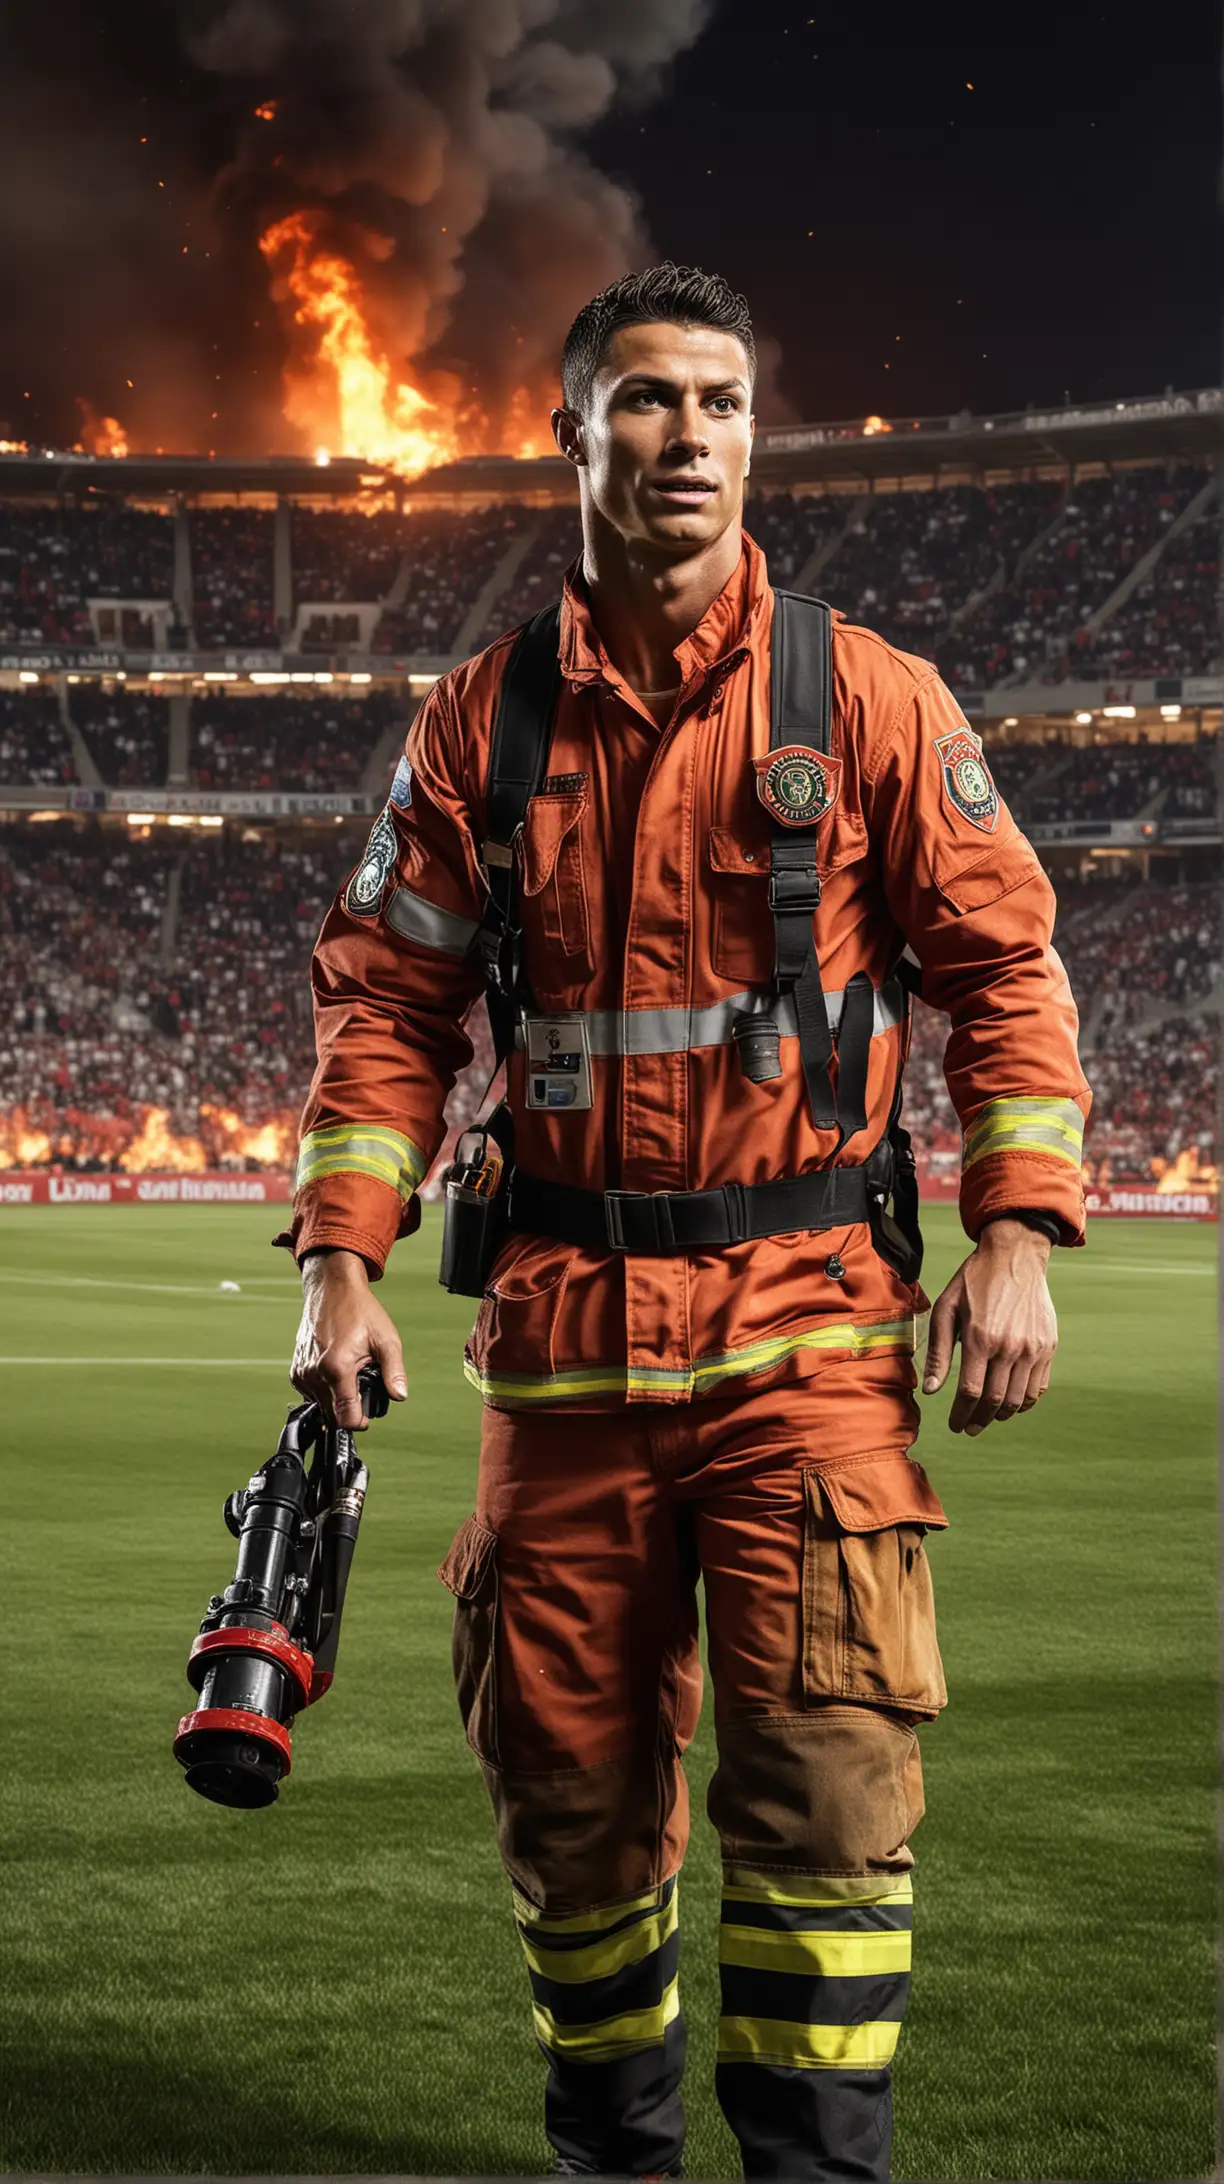 Cristiano Ronaldo as fire fighter, stadium background 